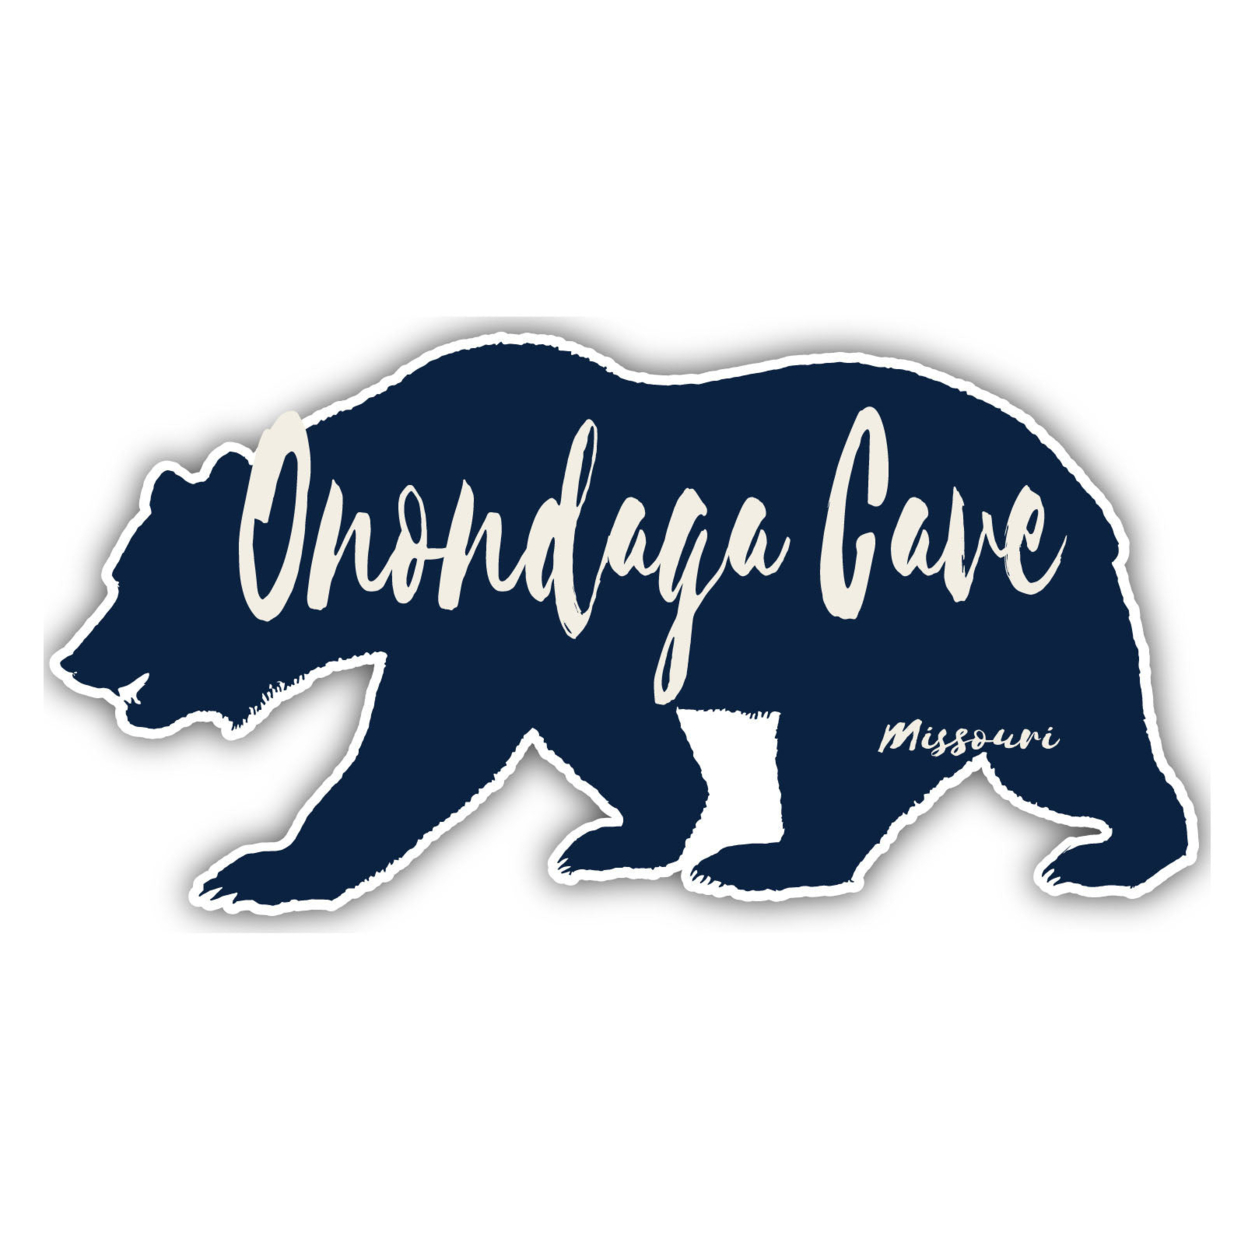 Onondaga Cave Missouri Souvenir Decorative Stickers (Choose Theme And Size) - Single Unit, 4-Inch, Bear